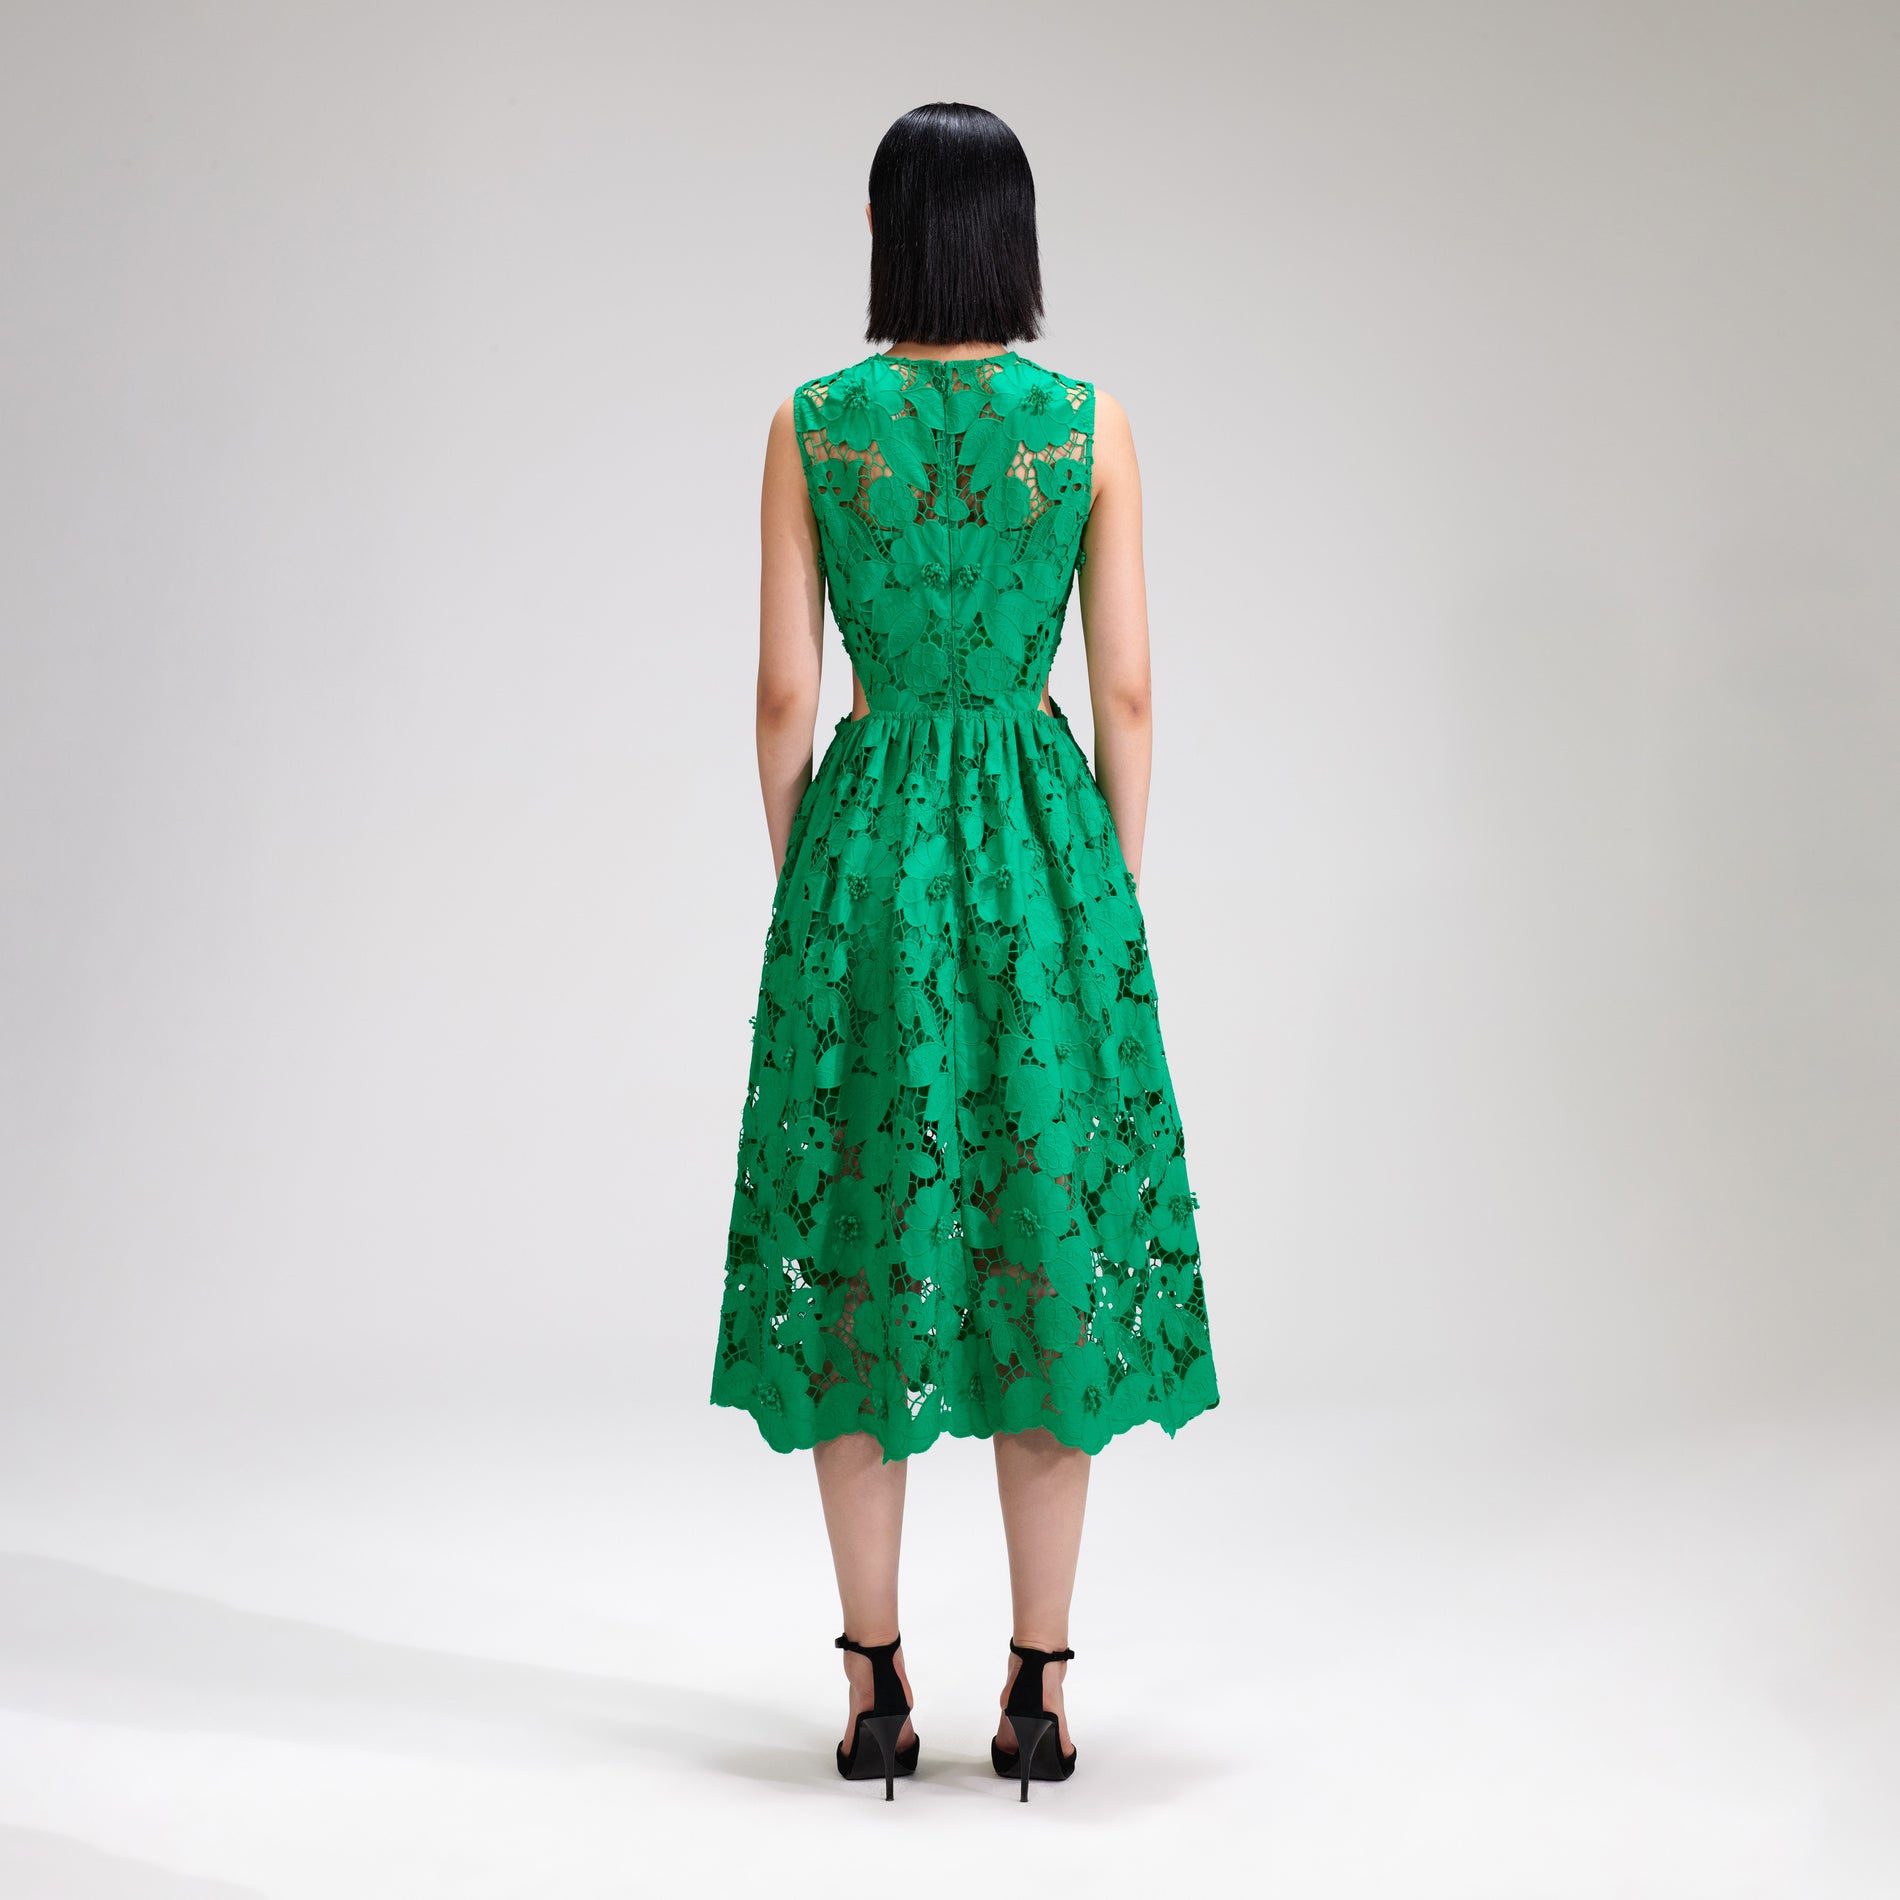 A woman wearing the Green 3D Cotton Lace Midi Dress